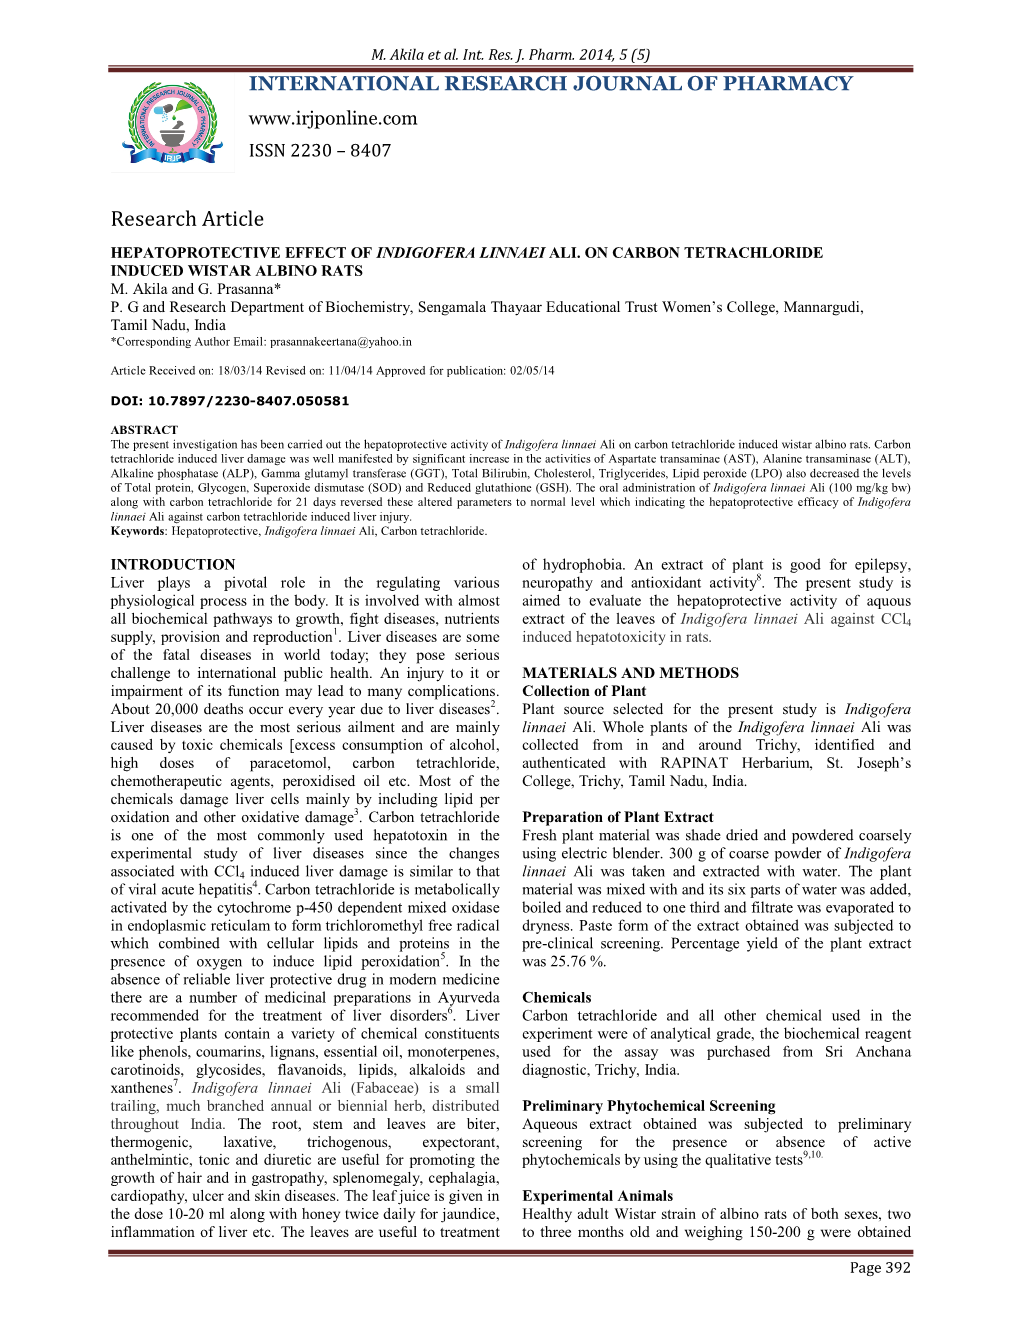 Hepatoprotective Effect of Indigofera Linnaei Ali. on Carbon Tetrachloride Induced Wistar Albino Rats M